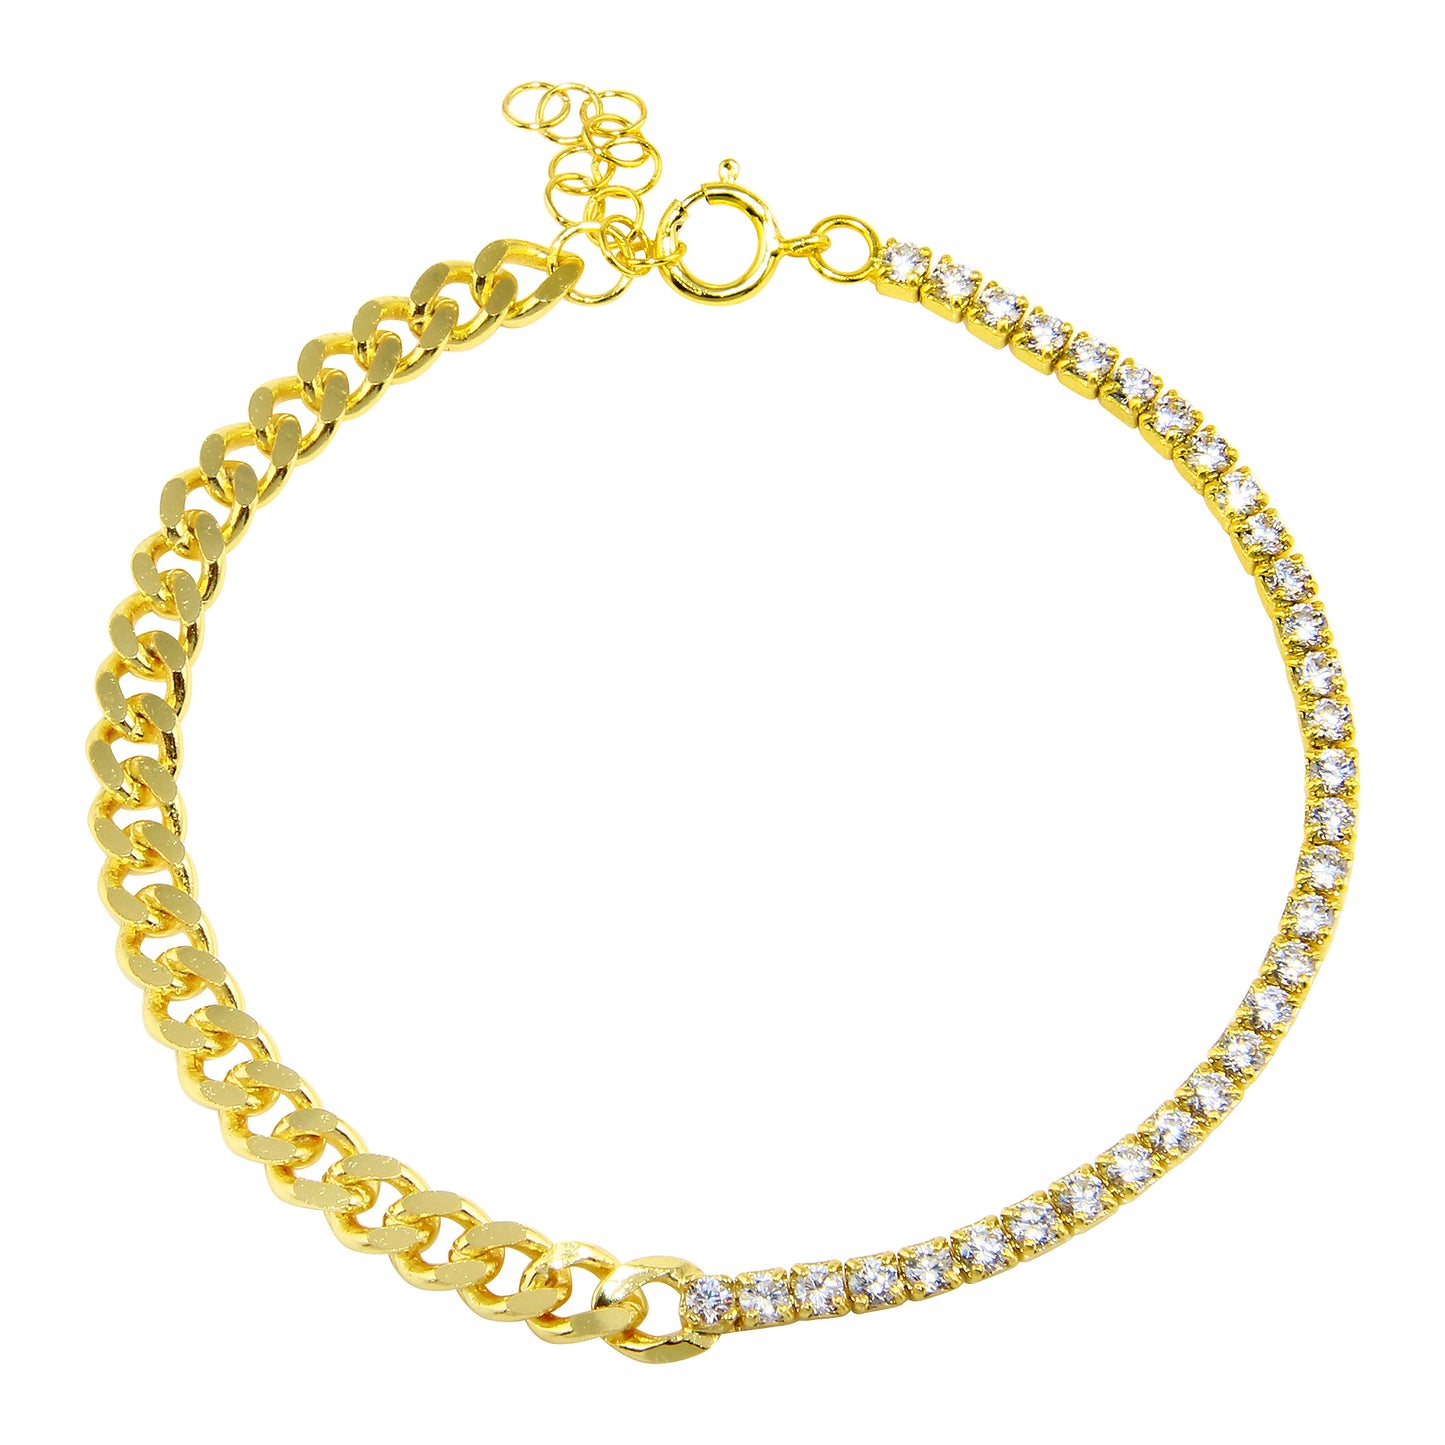 Curb Chain and Tennis Chain Bracelet